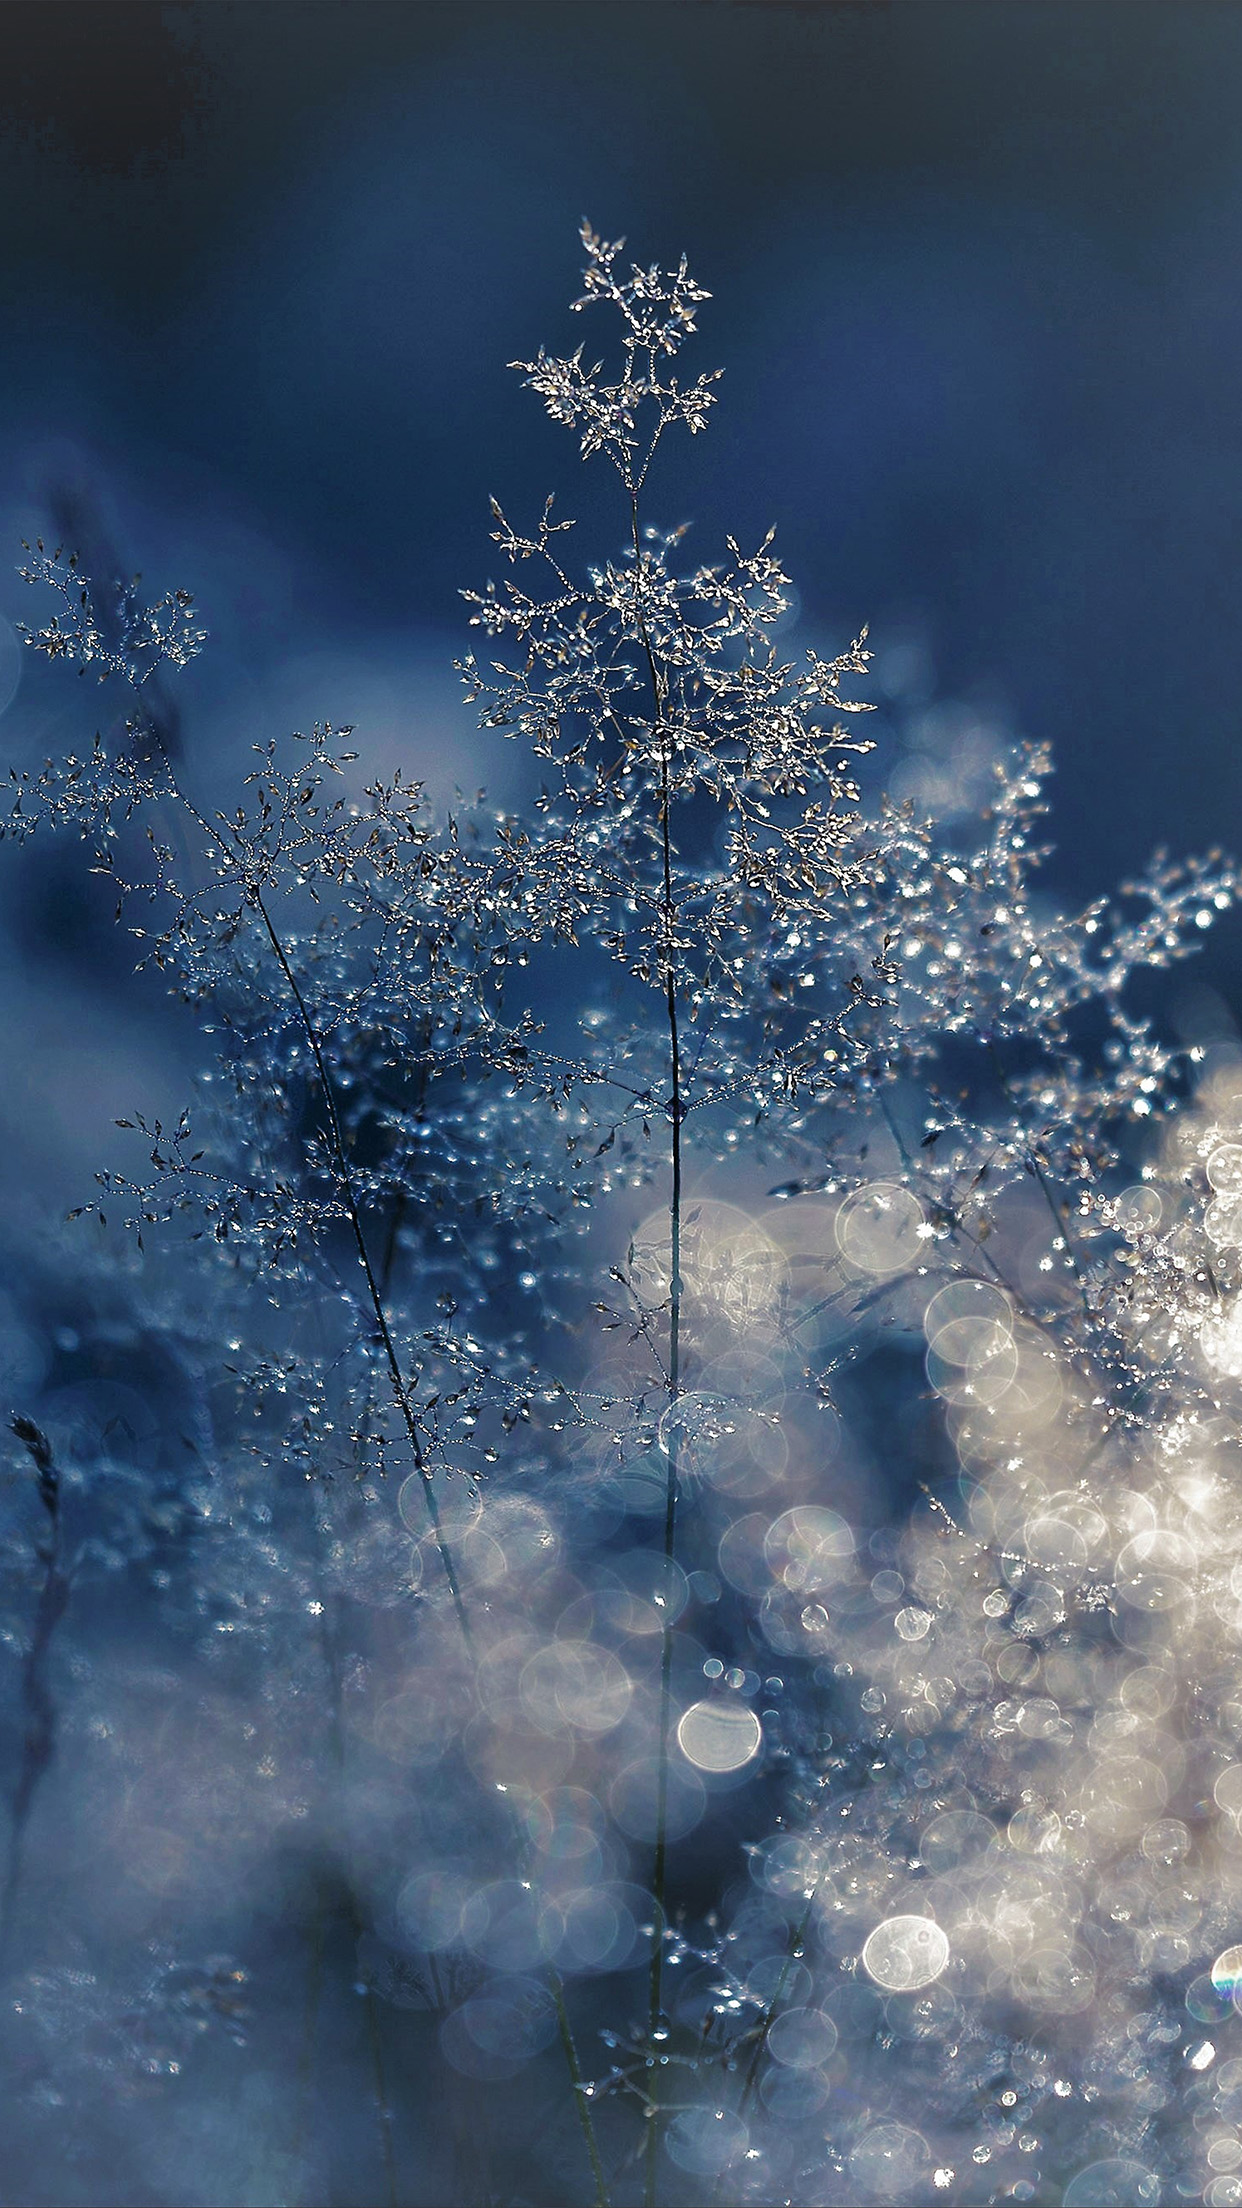 iPhone X wallpaper. snow bokeh light beautiful nature blue